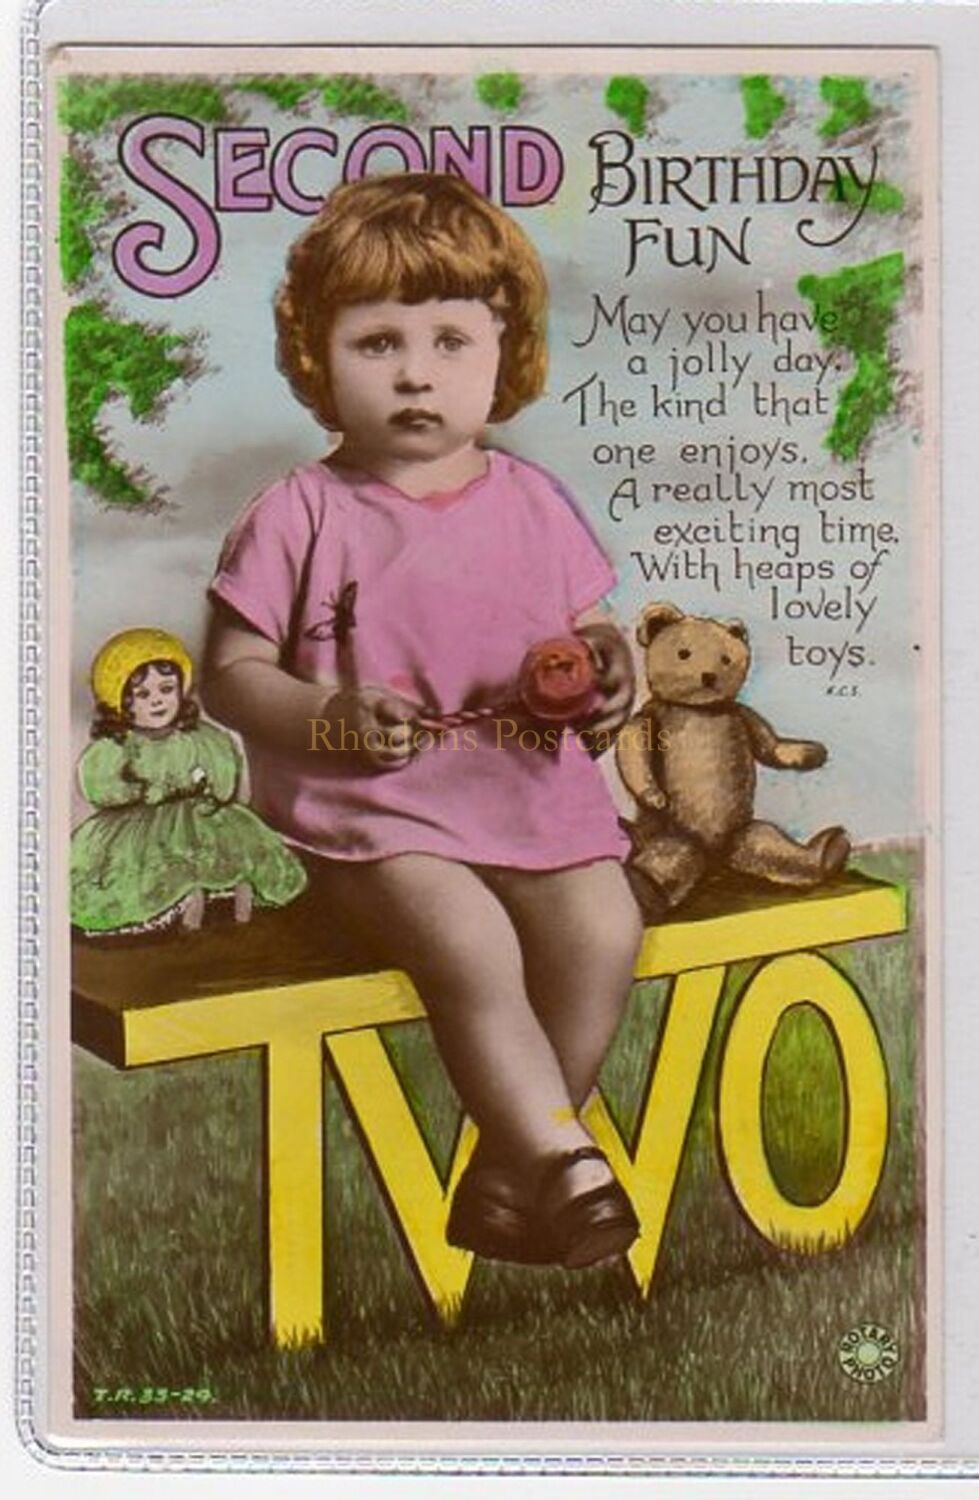 1930s Childs Birthday Postcard - Second Birthday Fun - Rotary Photo